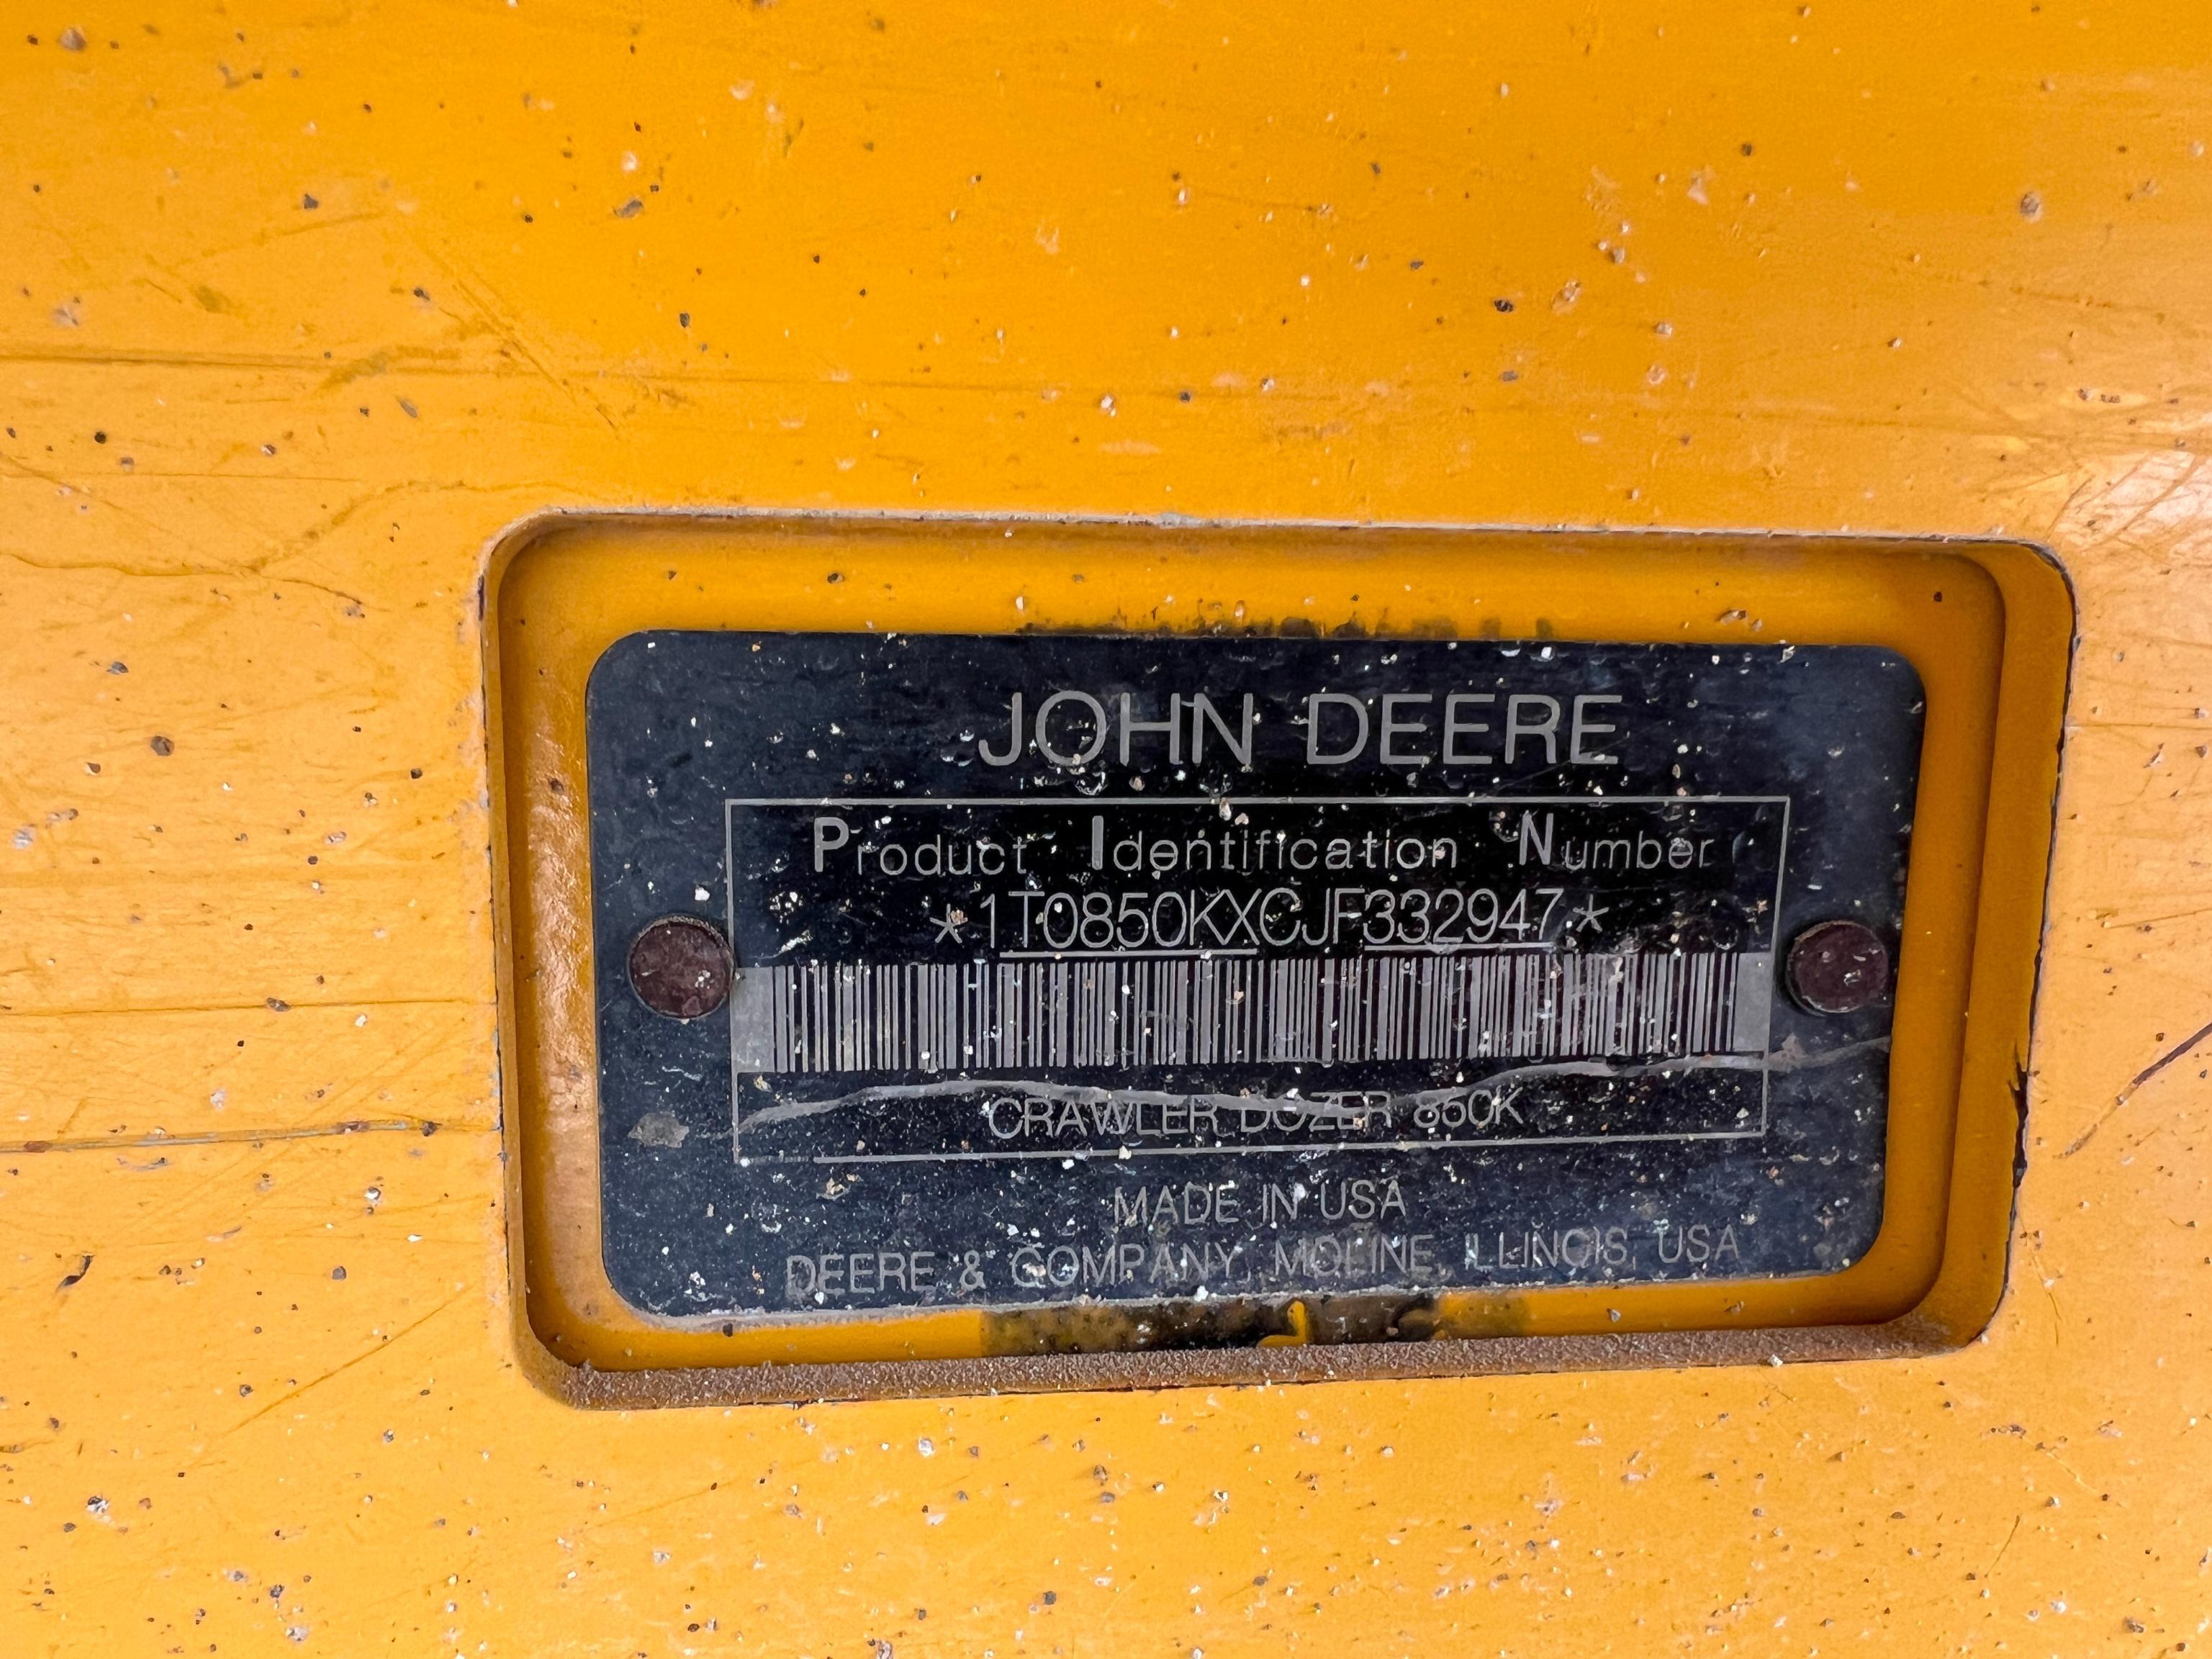 2018 JOHN DEERE 850K WLT CRAWLER TRACTOR SN:1T0850KXCJF332947 powered by John Deere diesel engine,